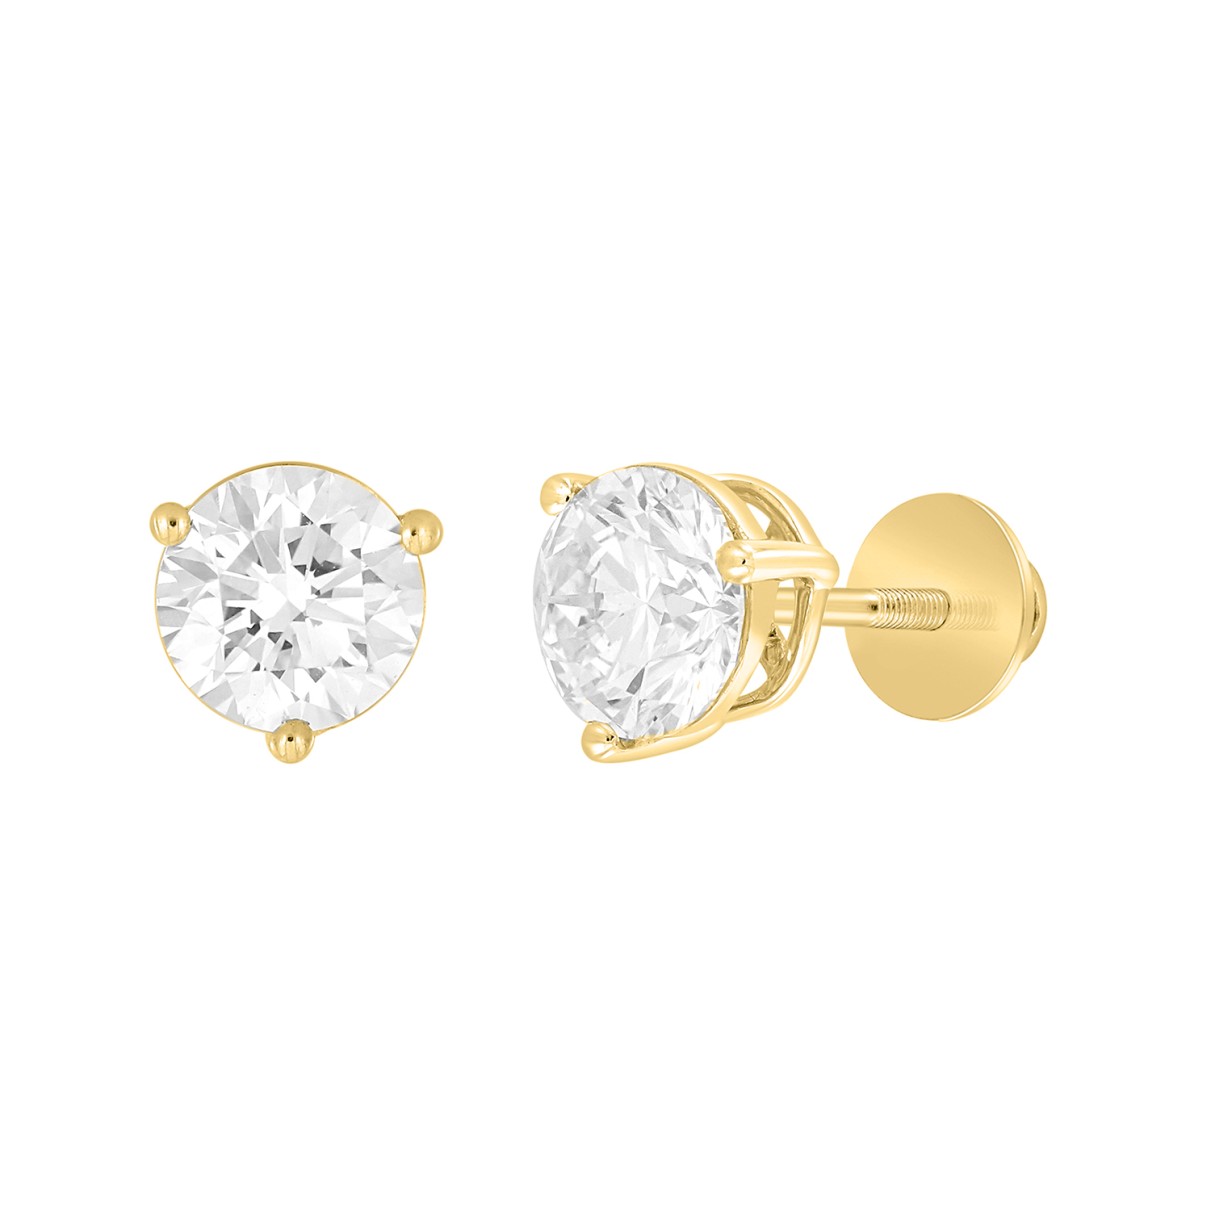 LADIES SOLITAIRE EARRINGS 4CT ROUND DIAMOND 14K YELLOW GOLD (CENTER STONE ROUND DIAMOND 2CT )